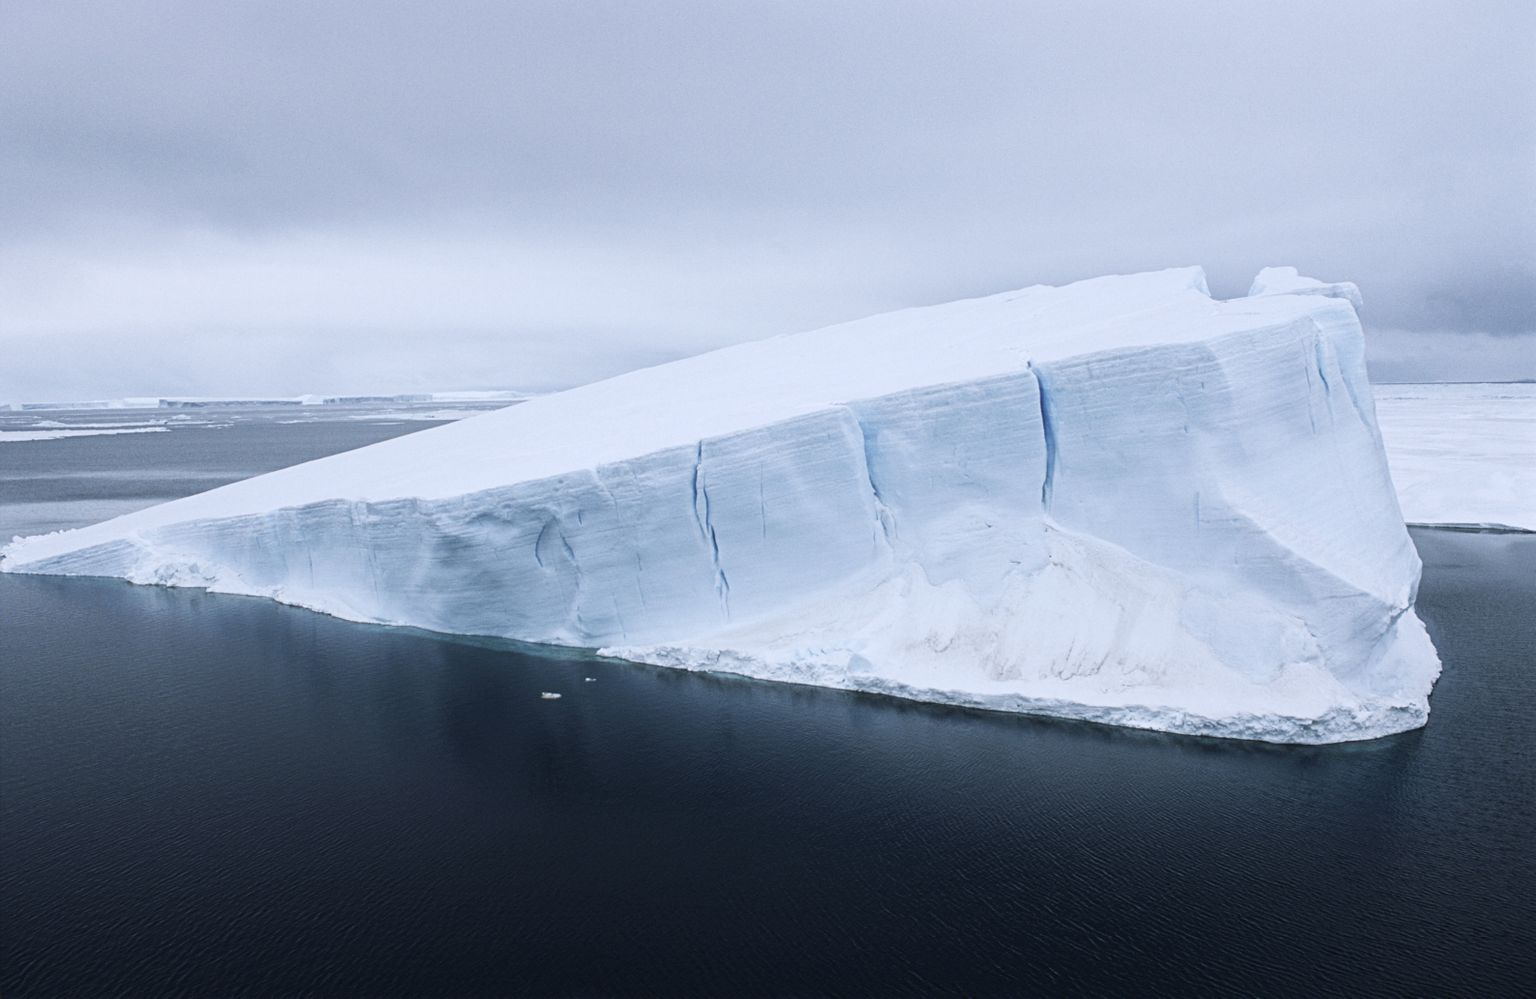 Антарктида. Иллюстративное фото.